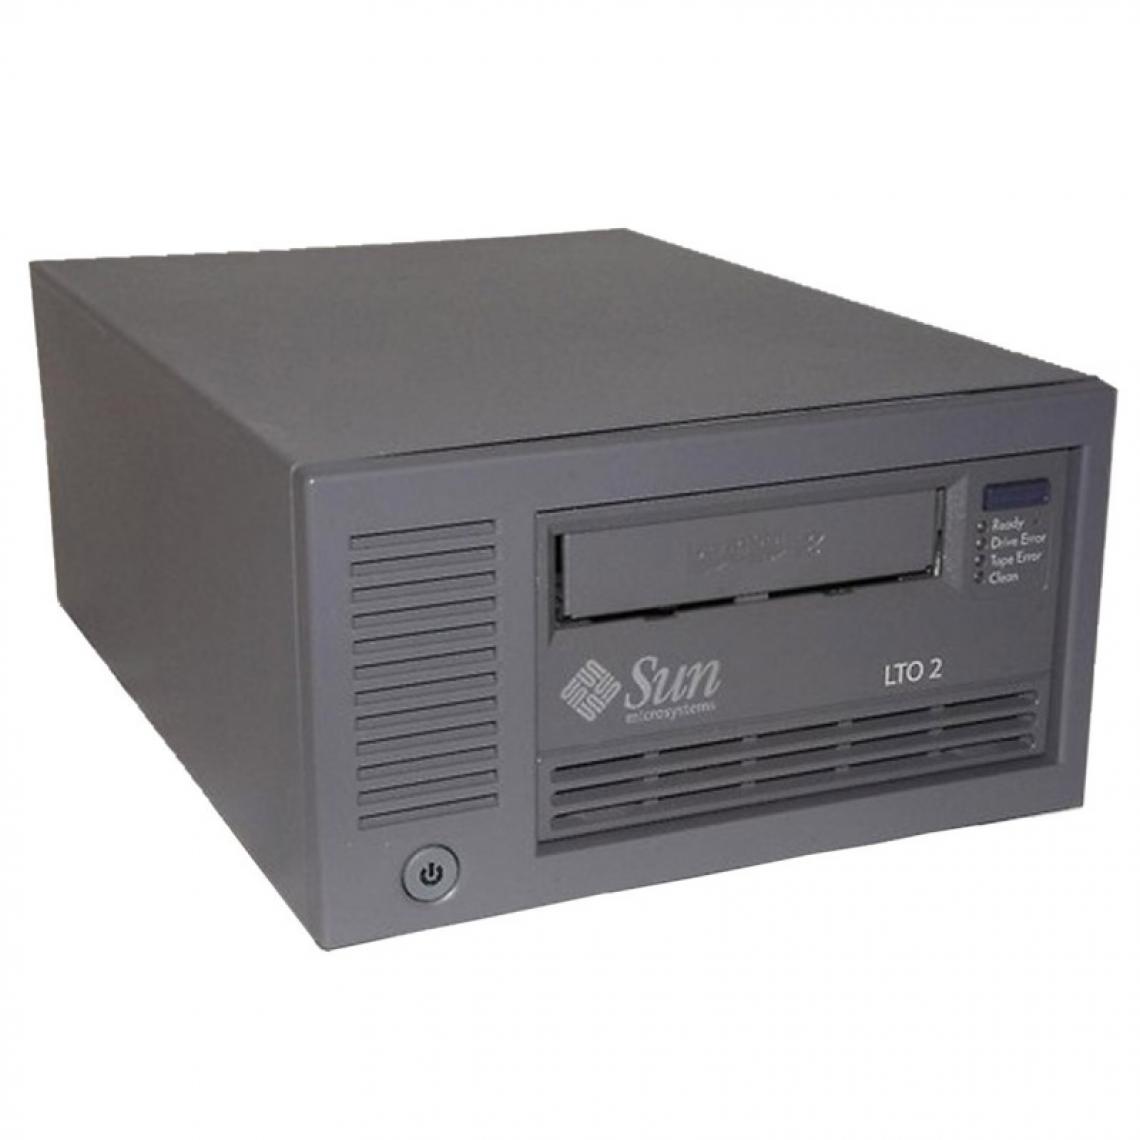 Sun Microsystems - Lecteur Externe Sun LTO2 Ultrium 460 BRSLA-0206-AC 380-1326-01 SCSI LVD-SE - Lecteur Blu-ray